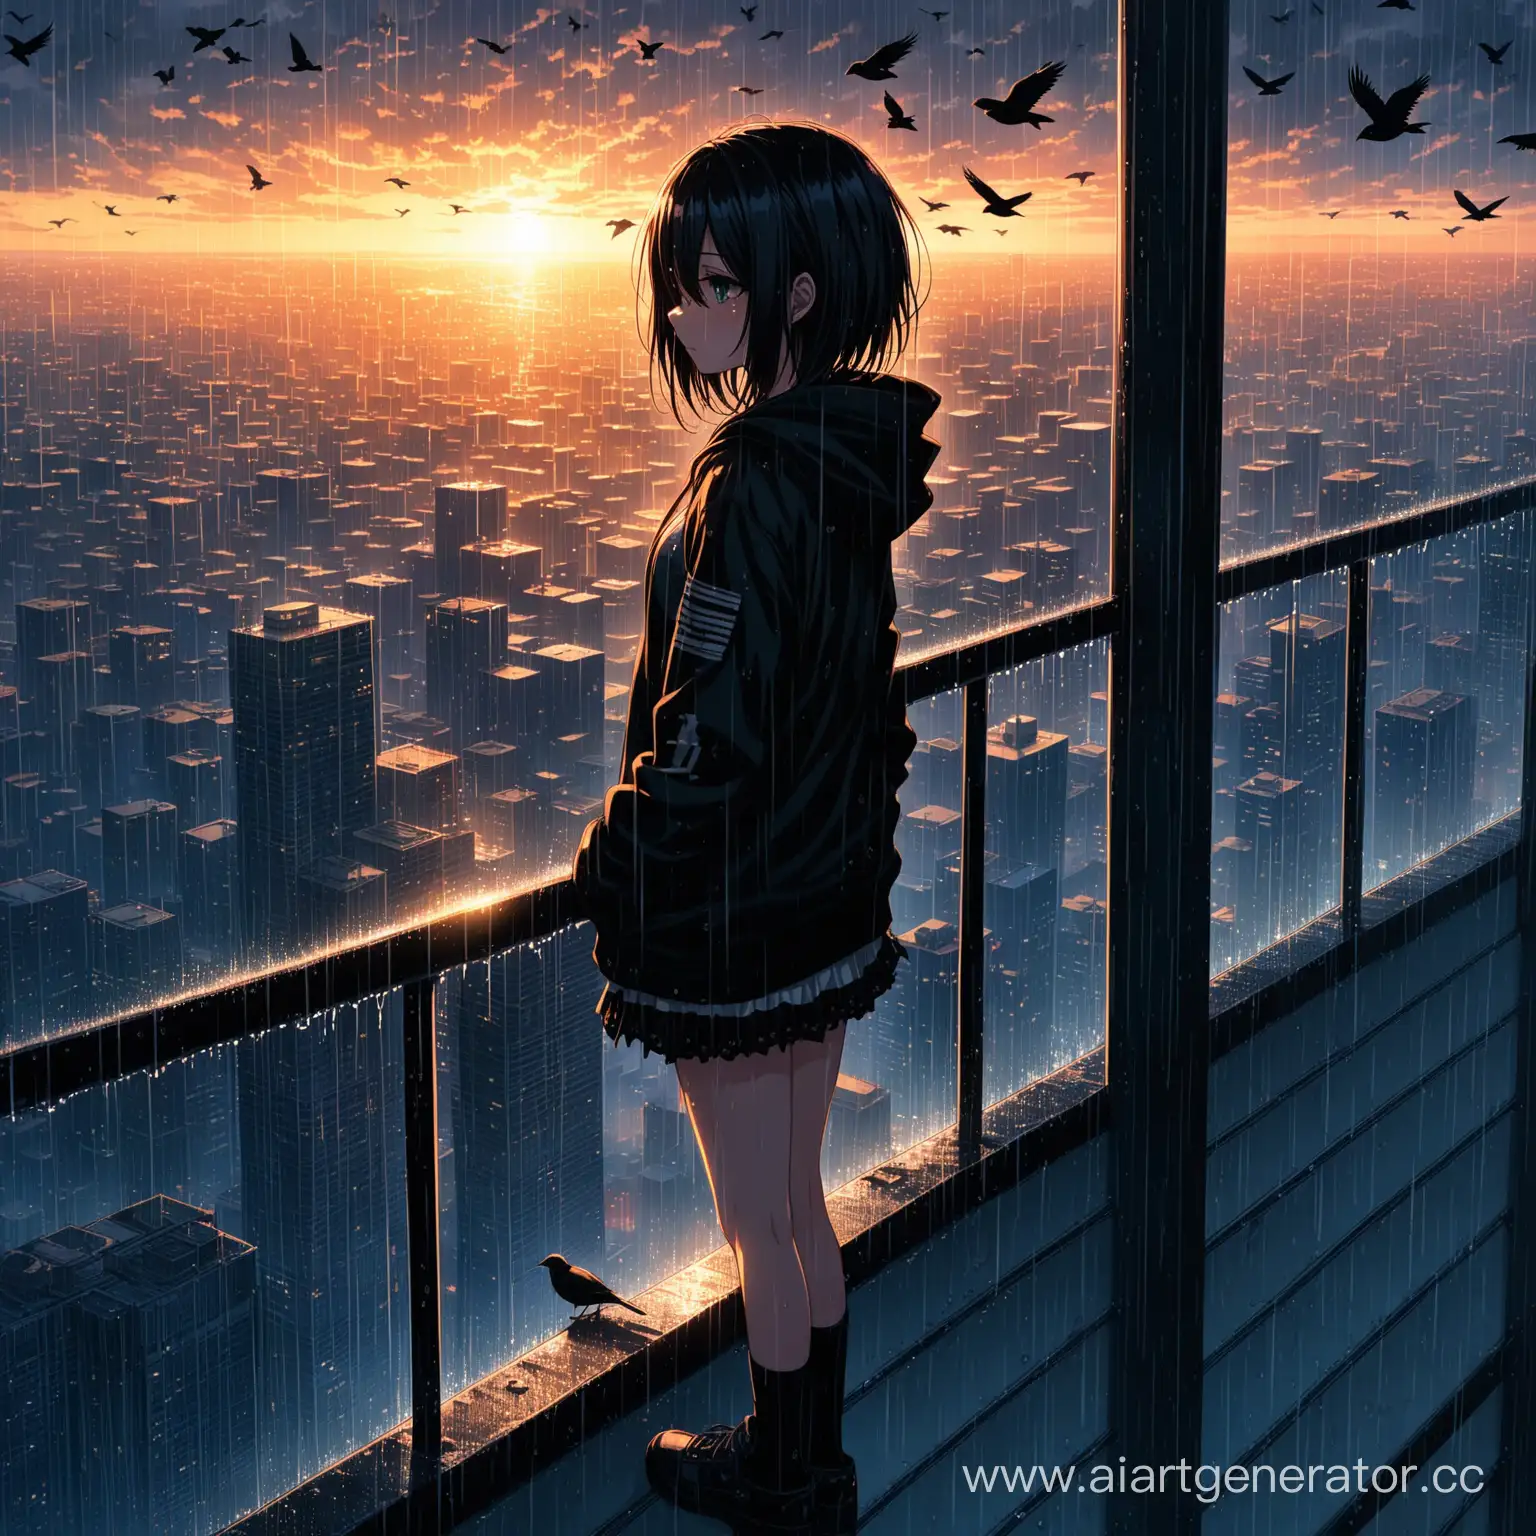 Emotive-Anime-Girl-Desperate-Sunset-Scene-on-Skyscraper-Edge